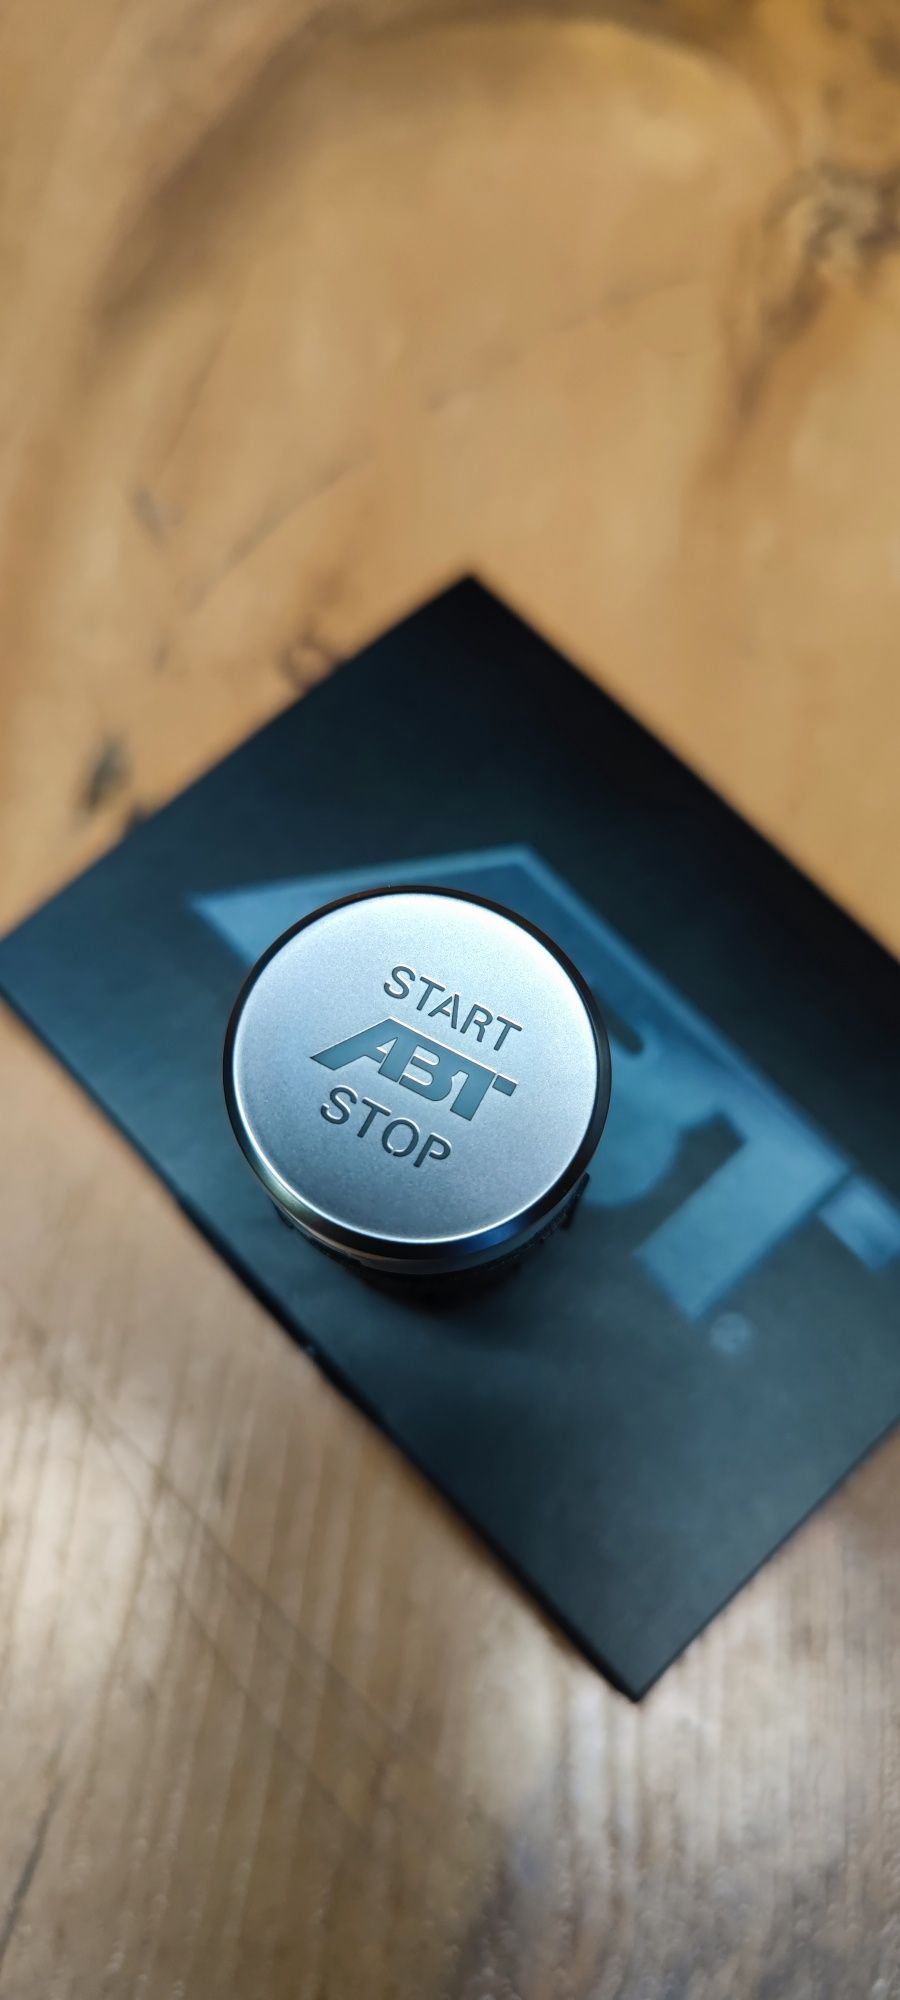 ABT Start engine Stop button